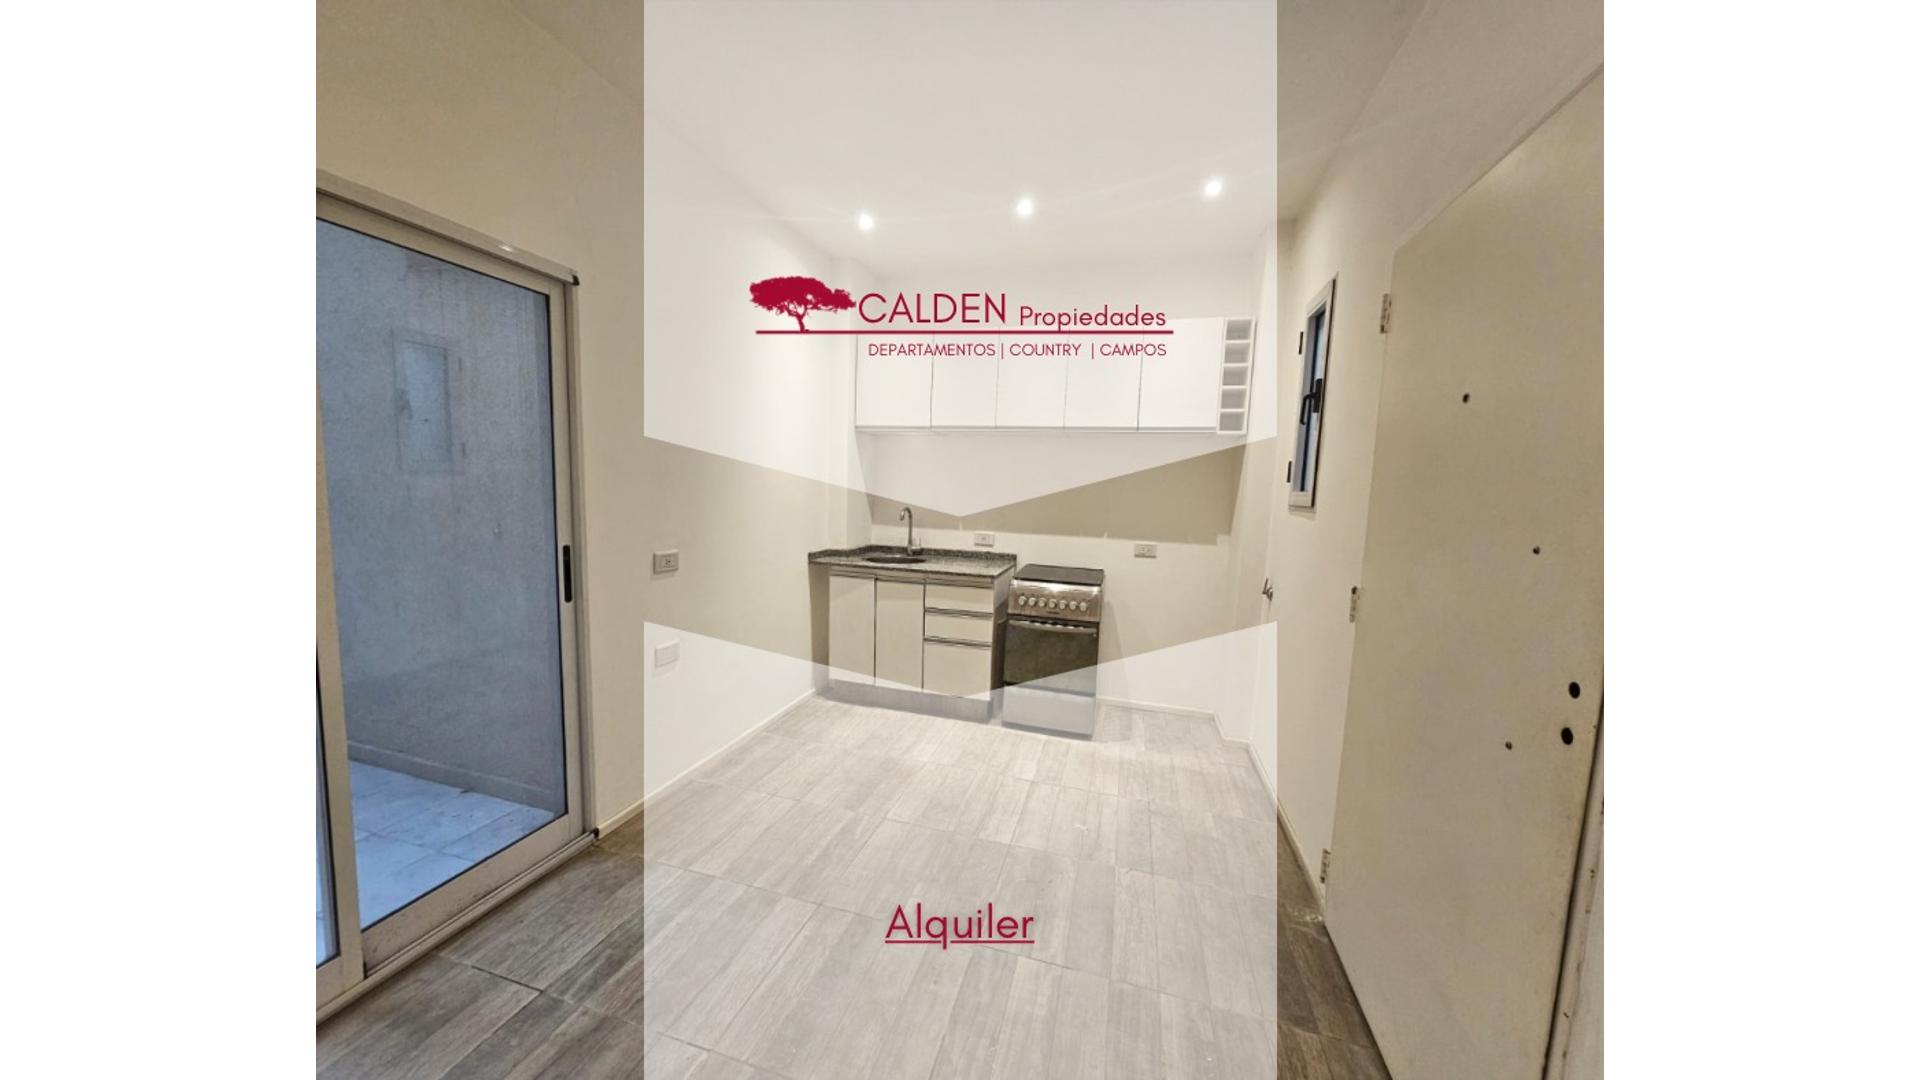 #5099497 | Rental | Apartment | Villa Urquiza (Calden propiedades)